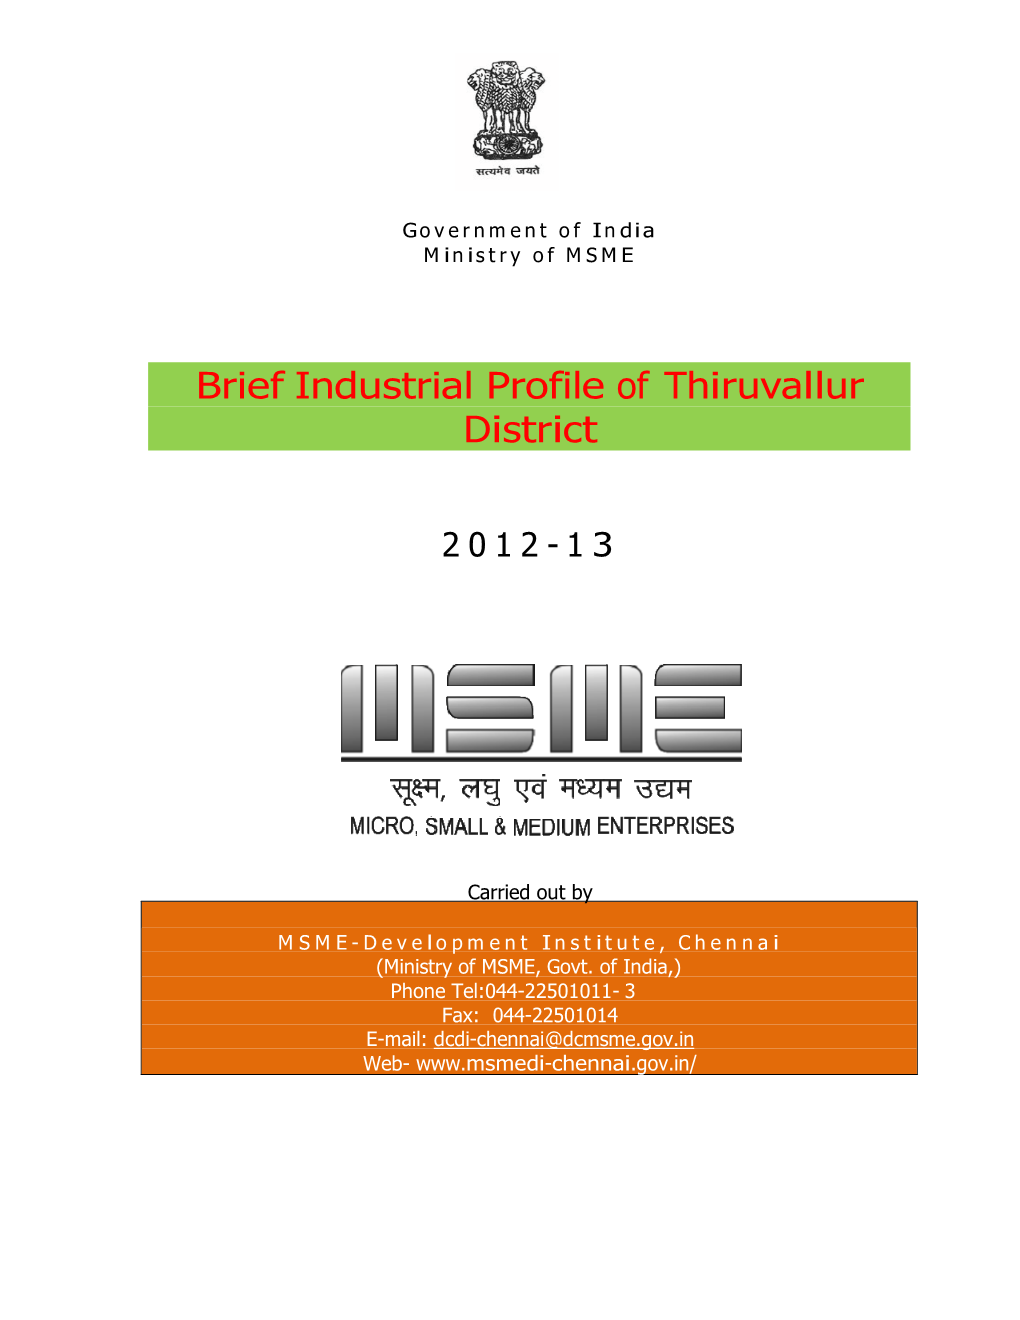 Brief Industrial Profile of Thiruvallur District